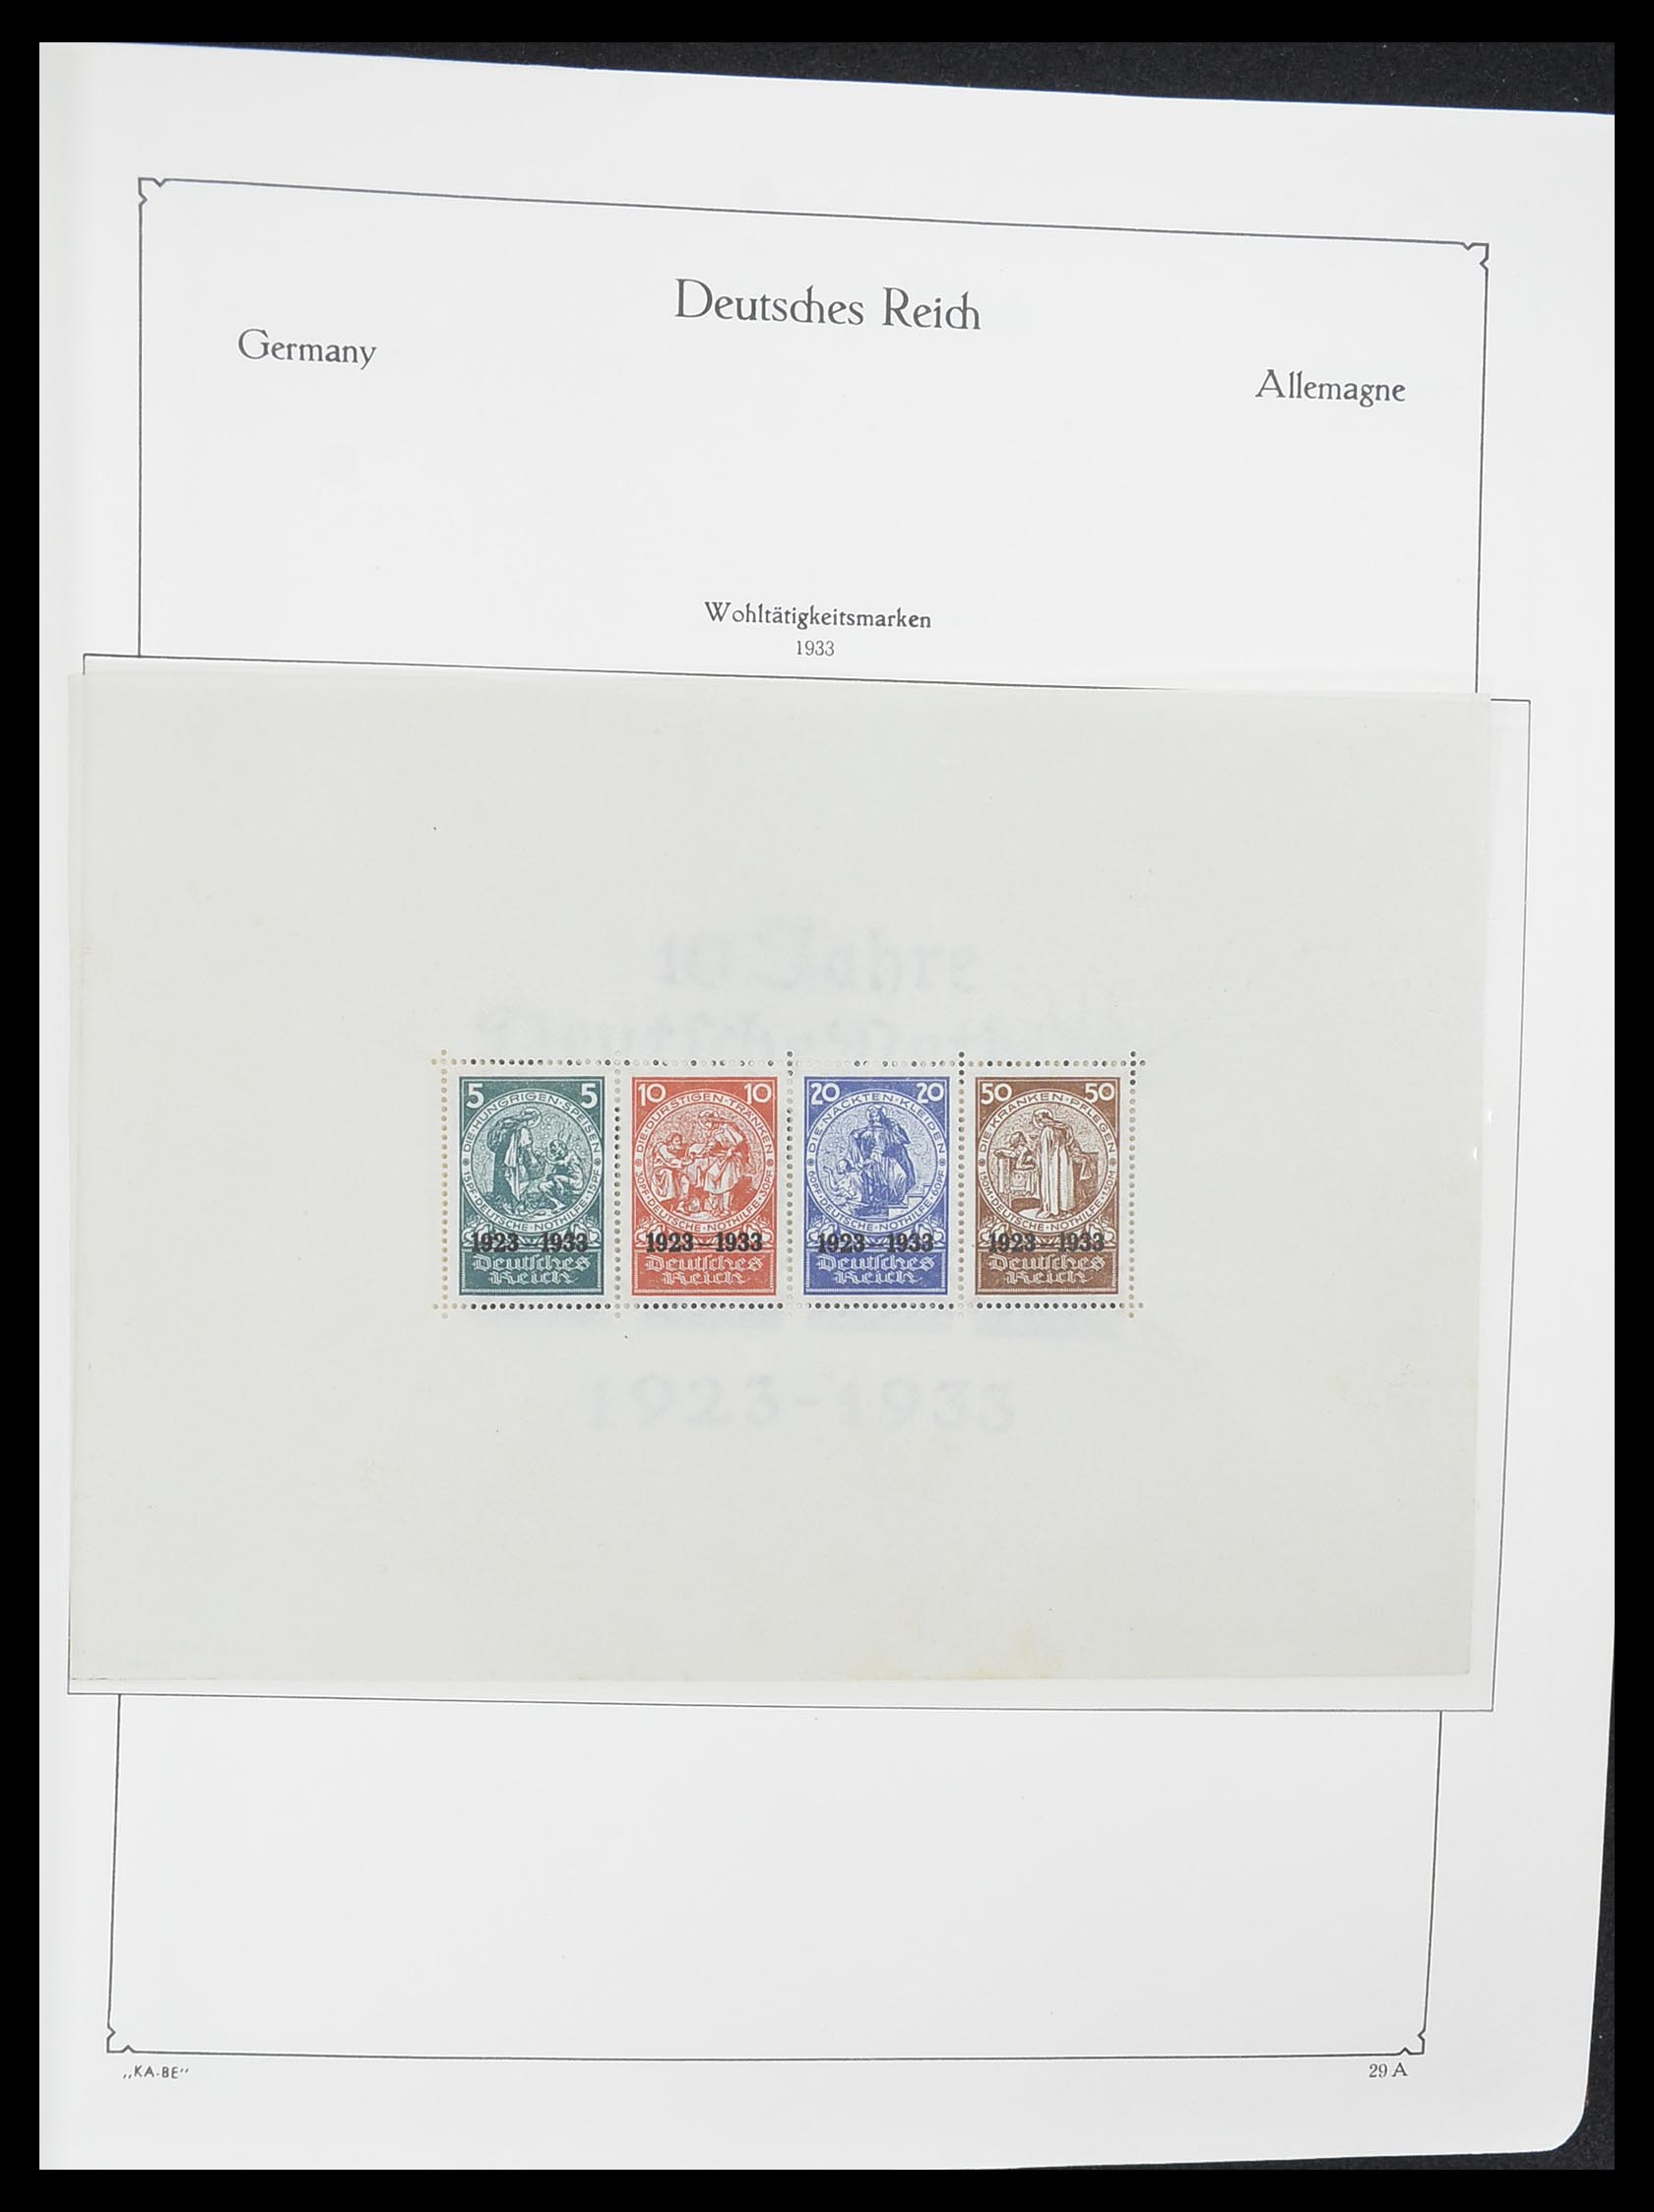 33358 007 - Stamp collection 33358 German Reich 1933-1945.